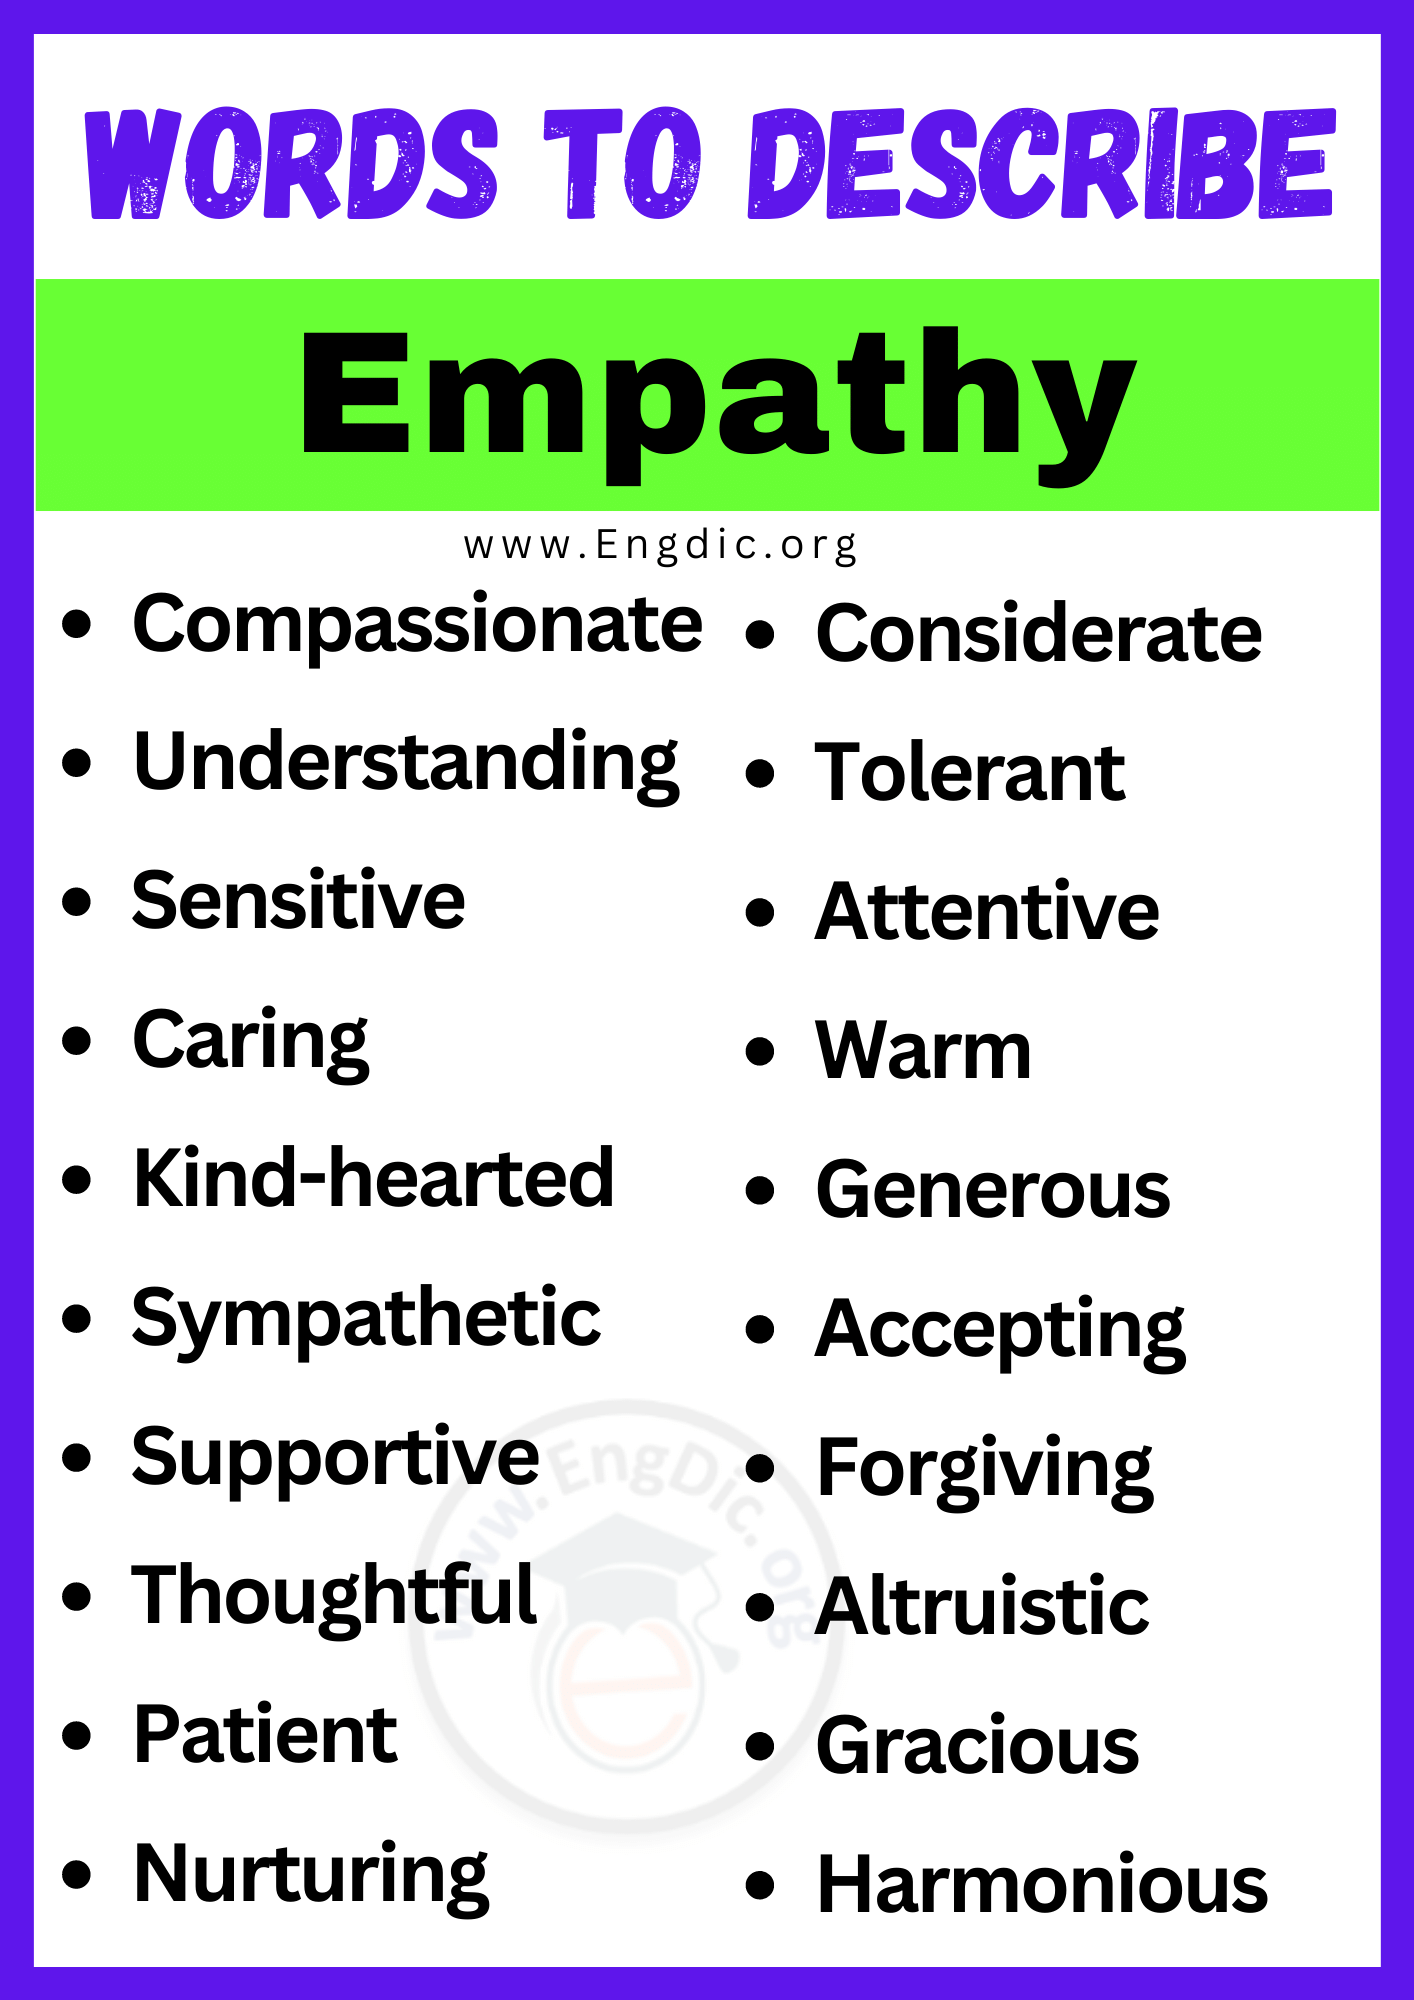 Words to Describe Empathy